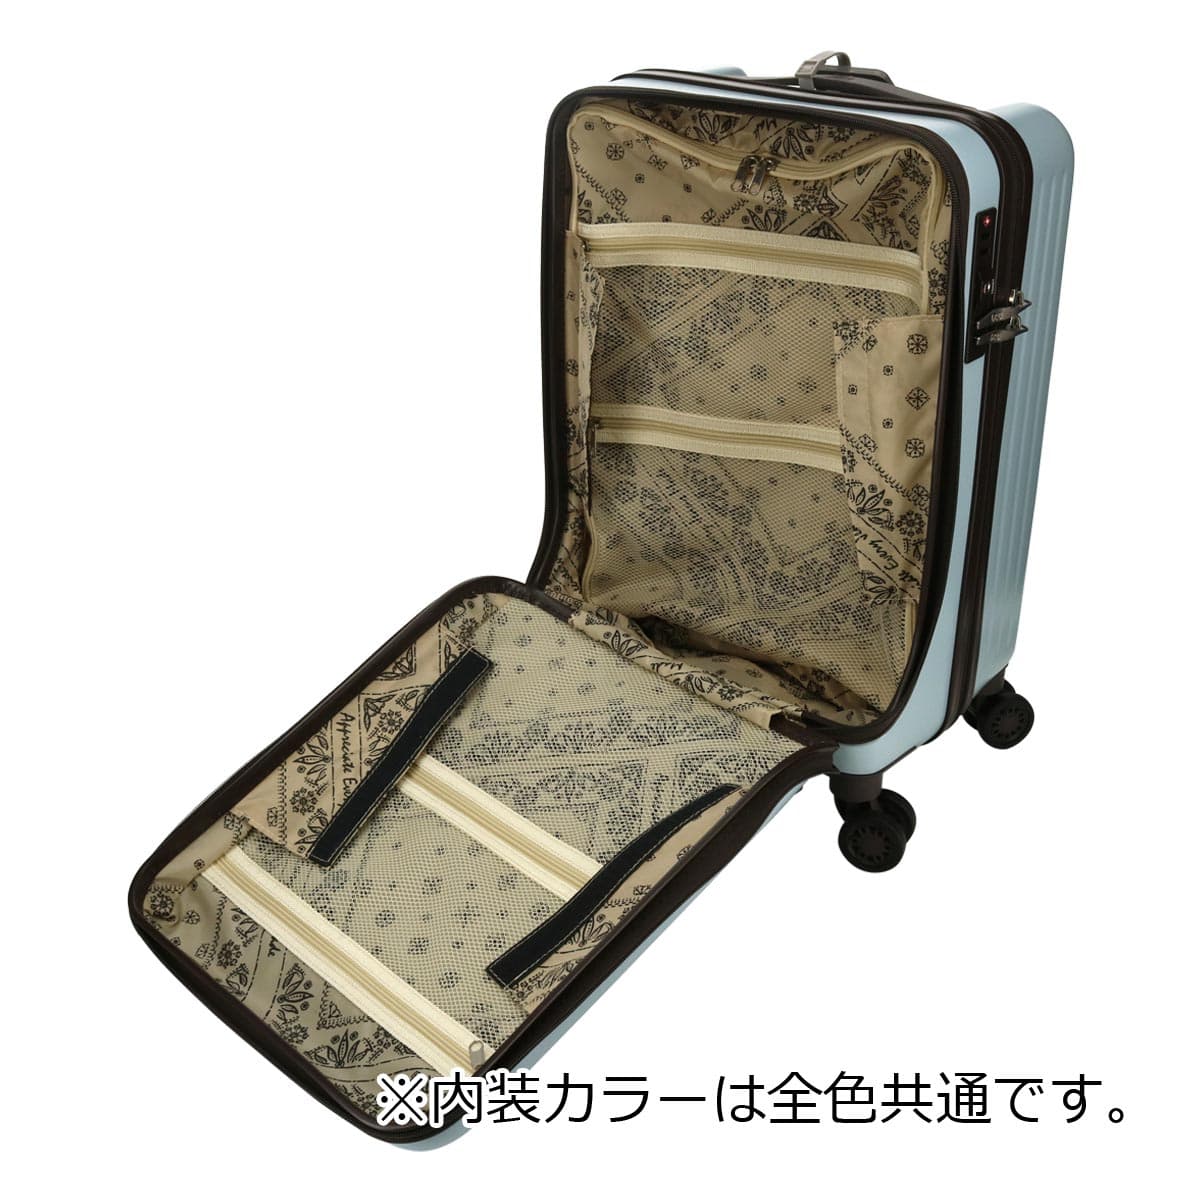 Lee スーツケース 37L 47cm 3kg フロントオープン リー 320-9020 19インチ journey TSAロック搭載 ハードキャリー